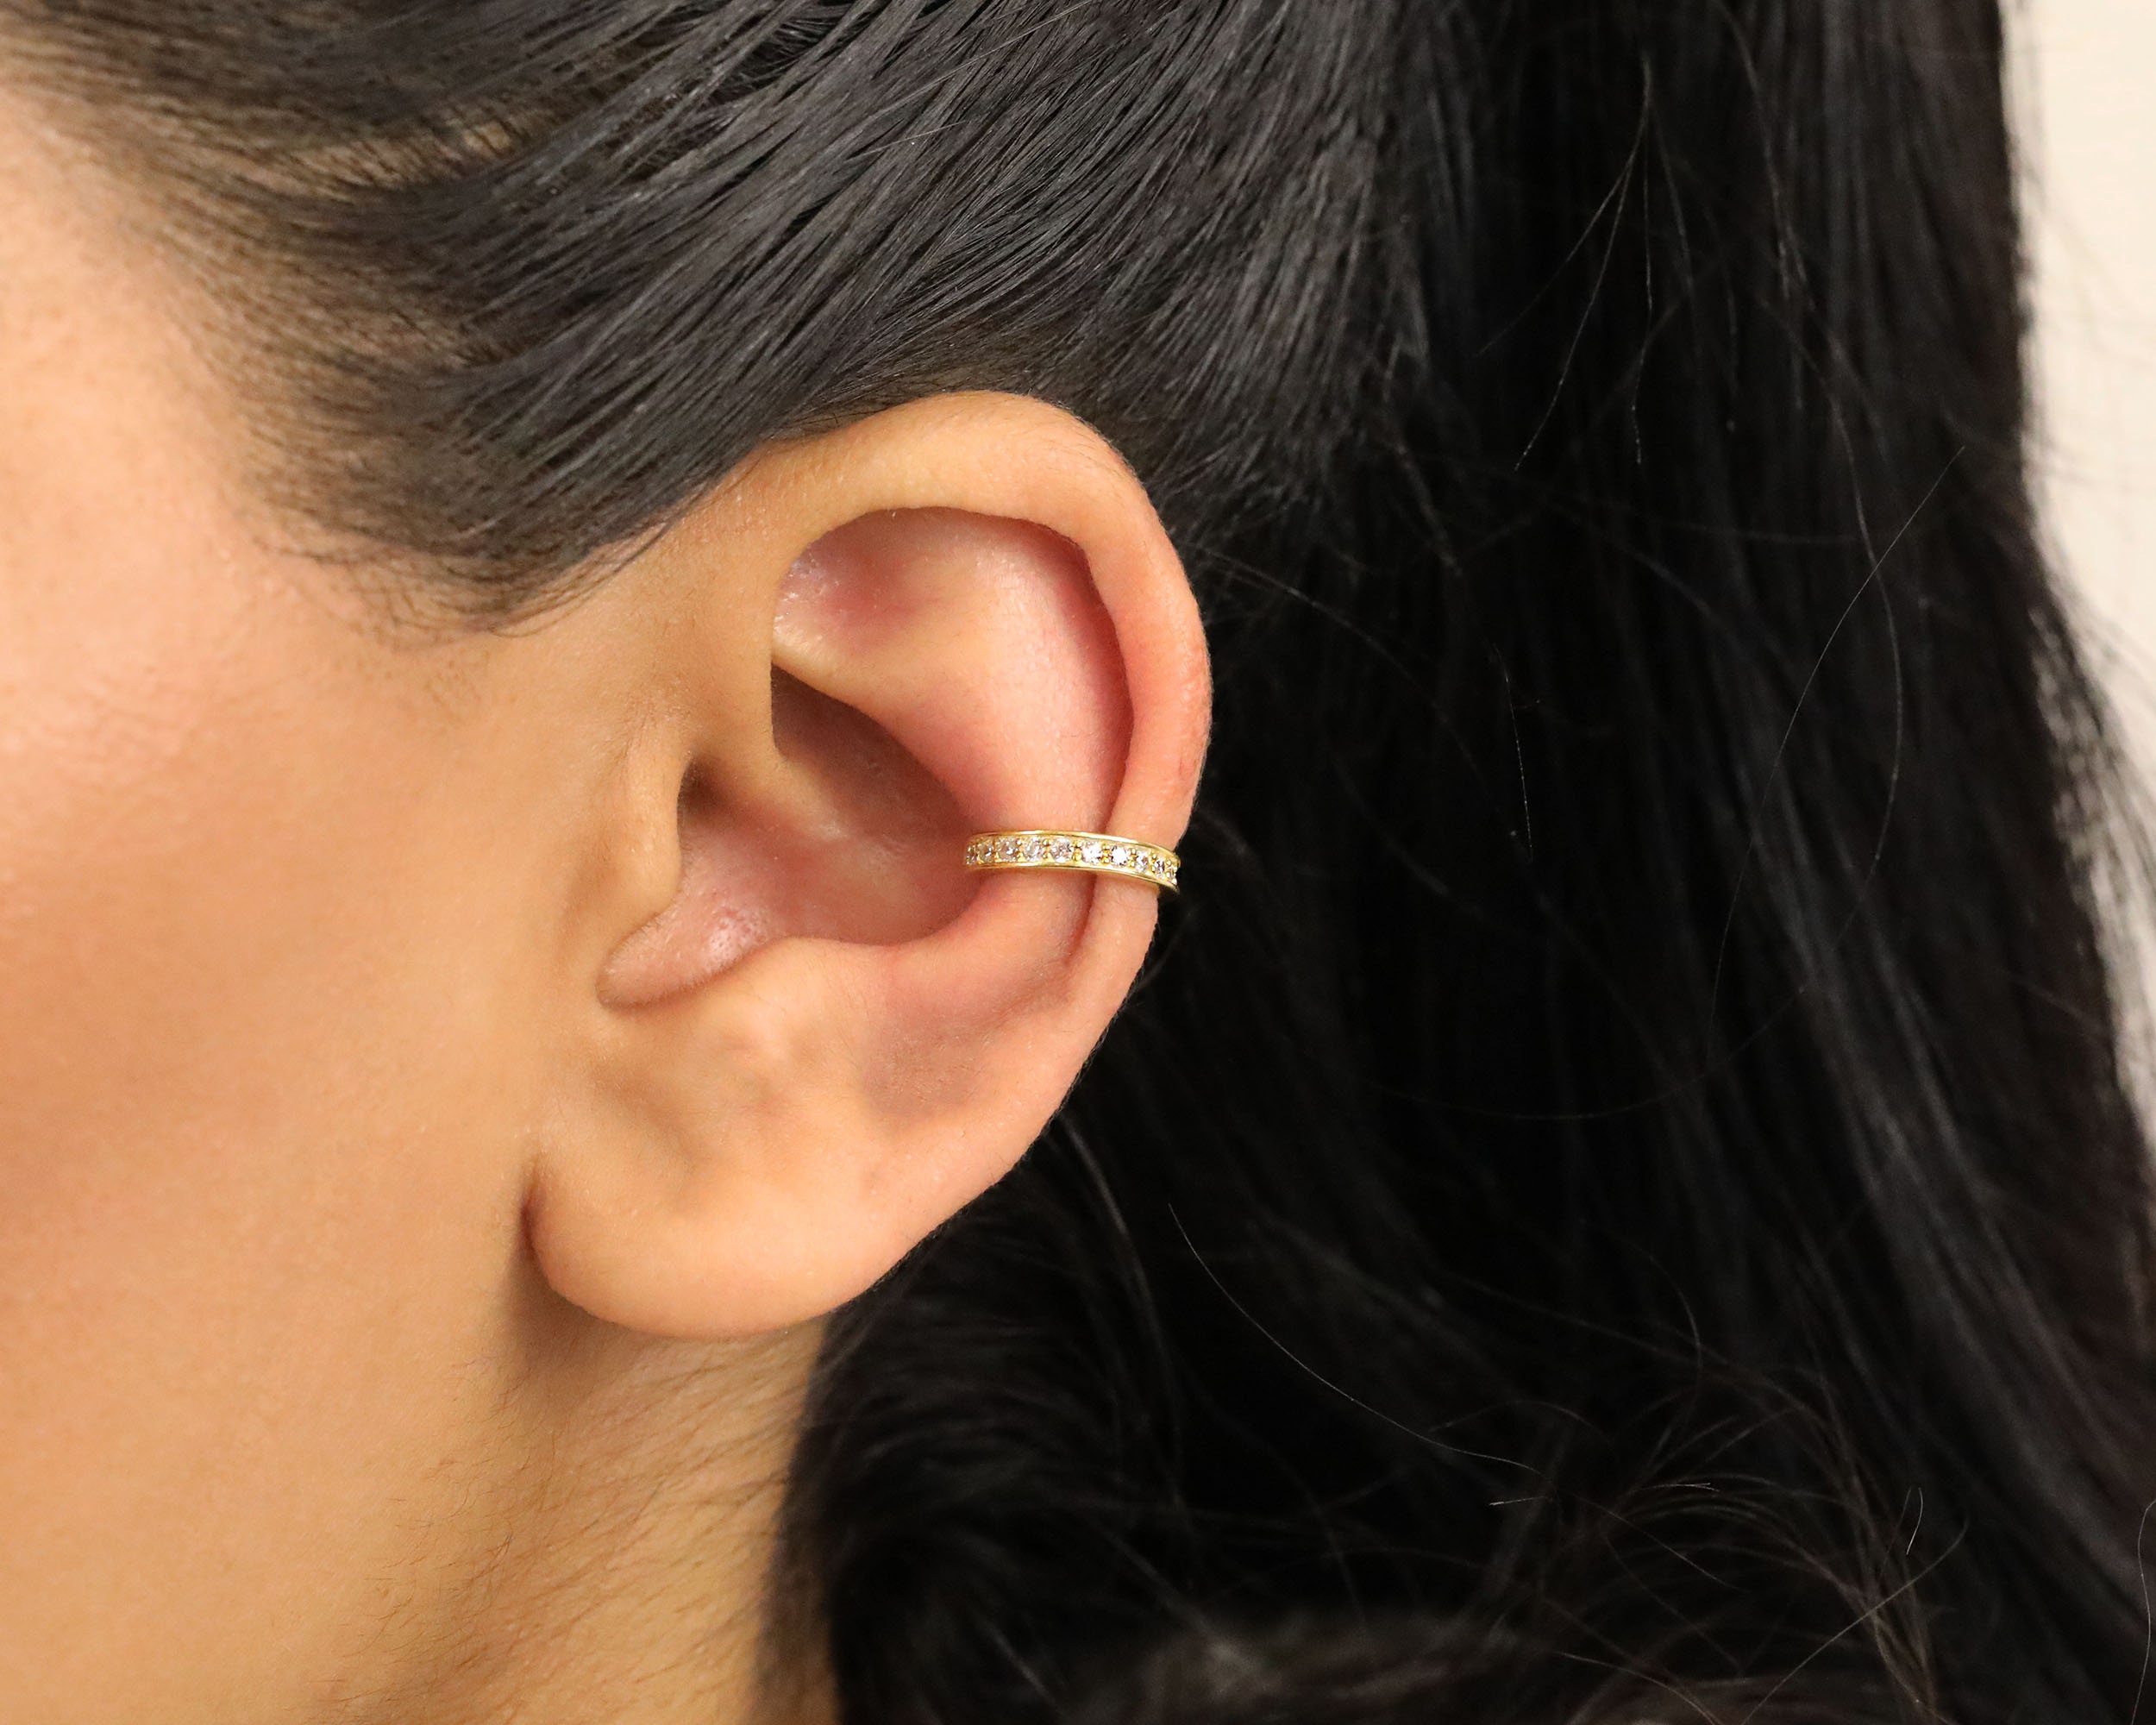 Non Piercing Vintage Gold Twist Back Earrings Ear Cuff Earrings Fake  Cartilage Jewelry From Clothingdeals, $5.56